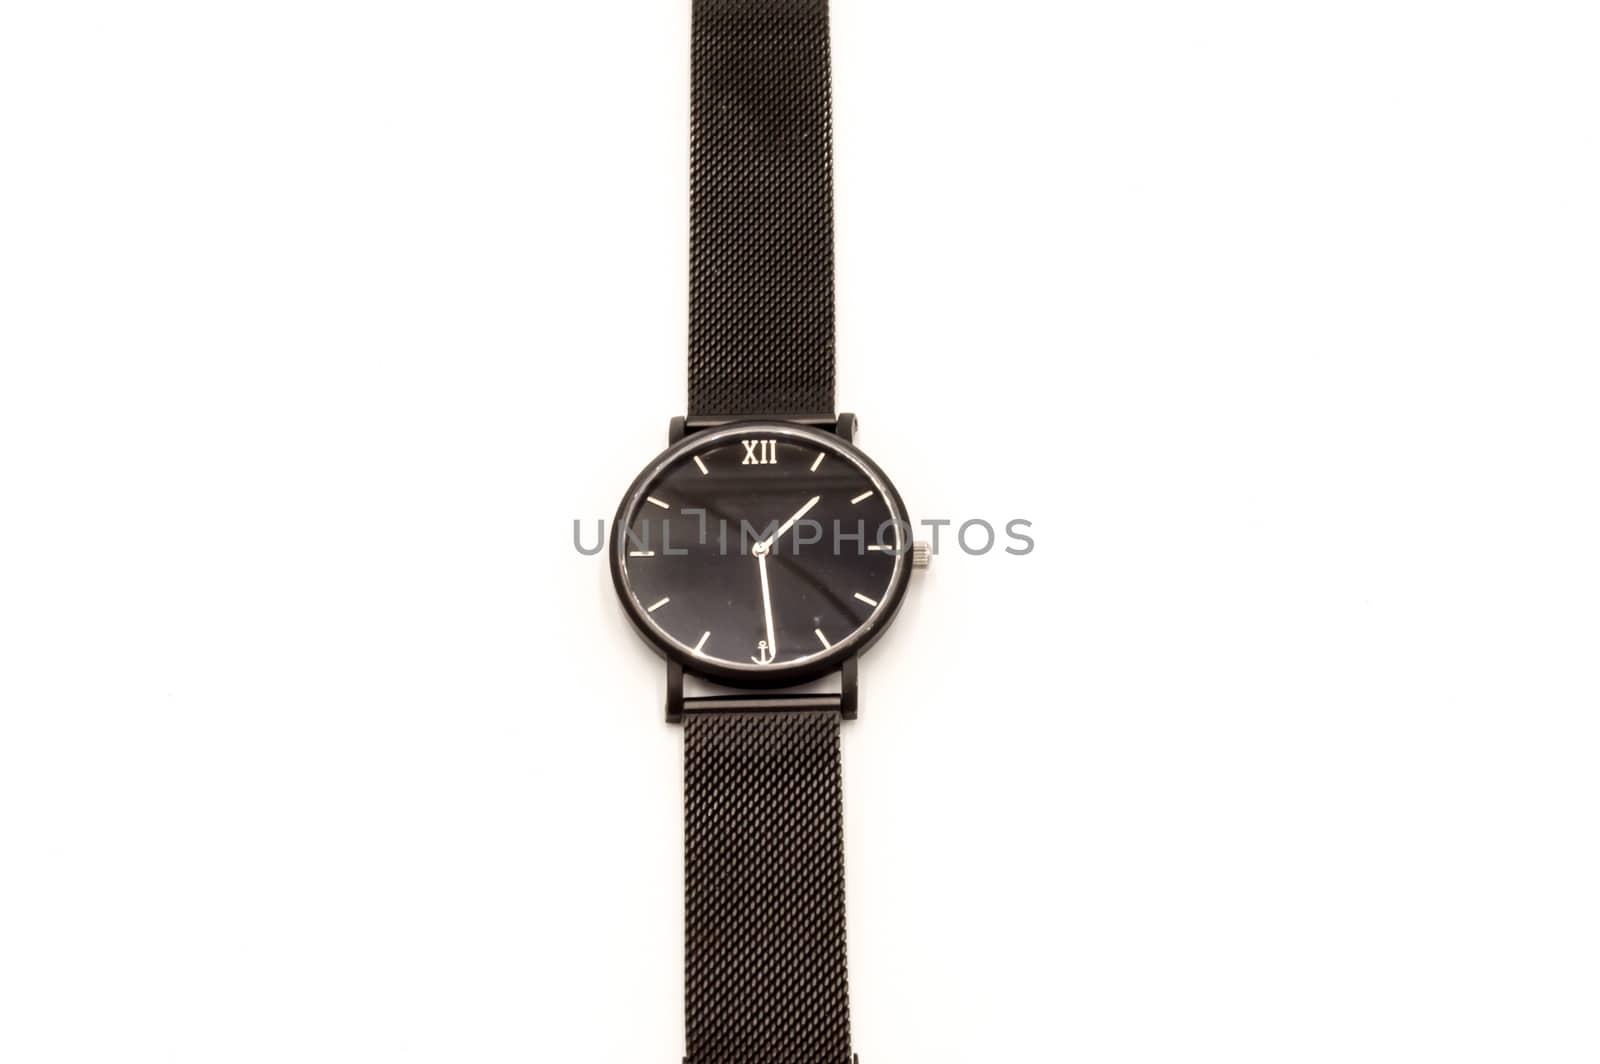 Classic black analog wristwatch on white background, close-up.